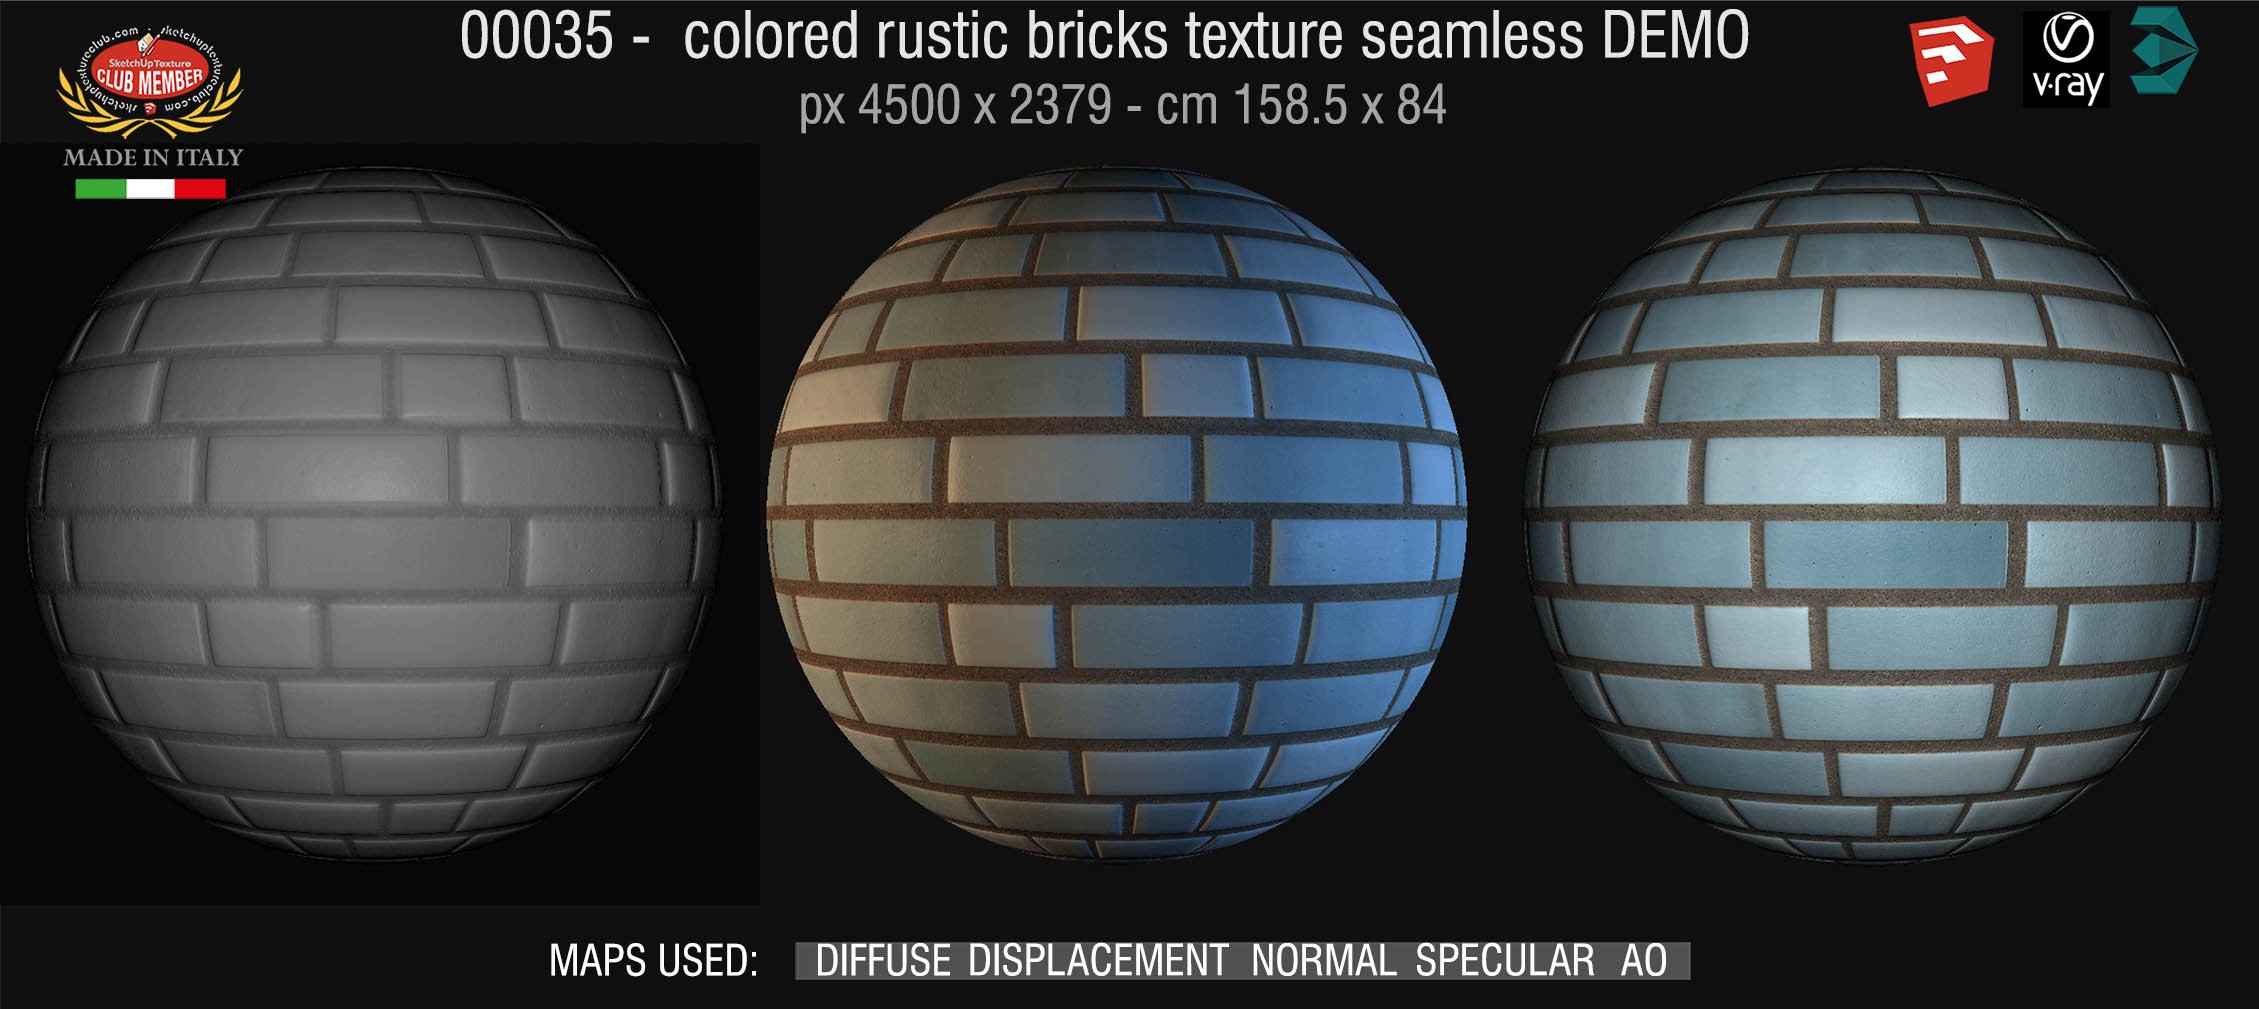 00035 colored rustic bricks texture seamless + maps DEMO